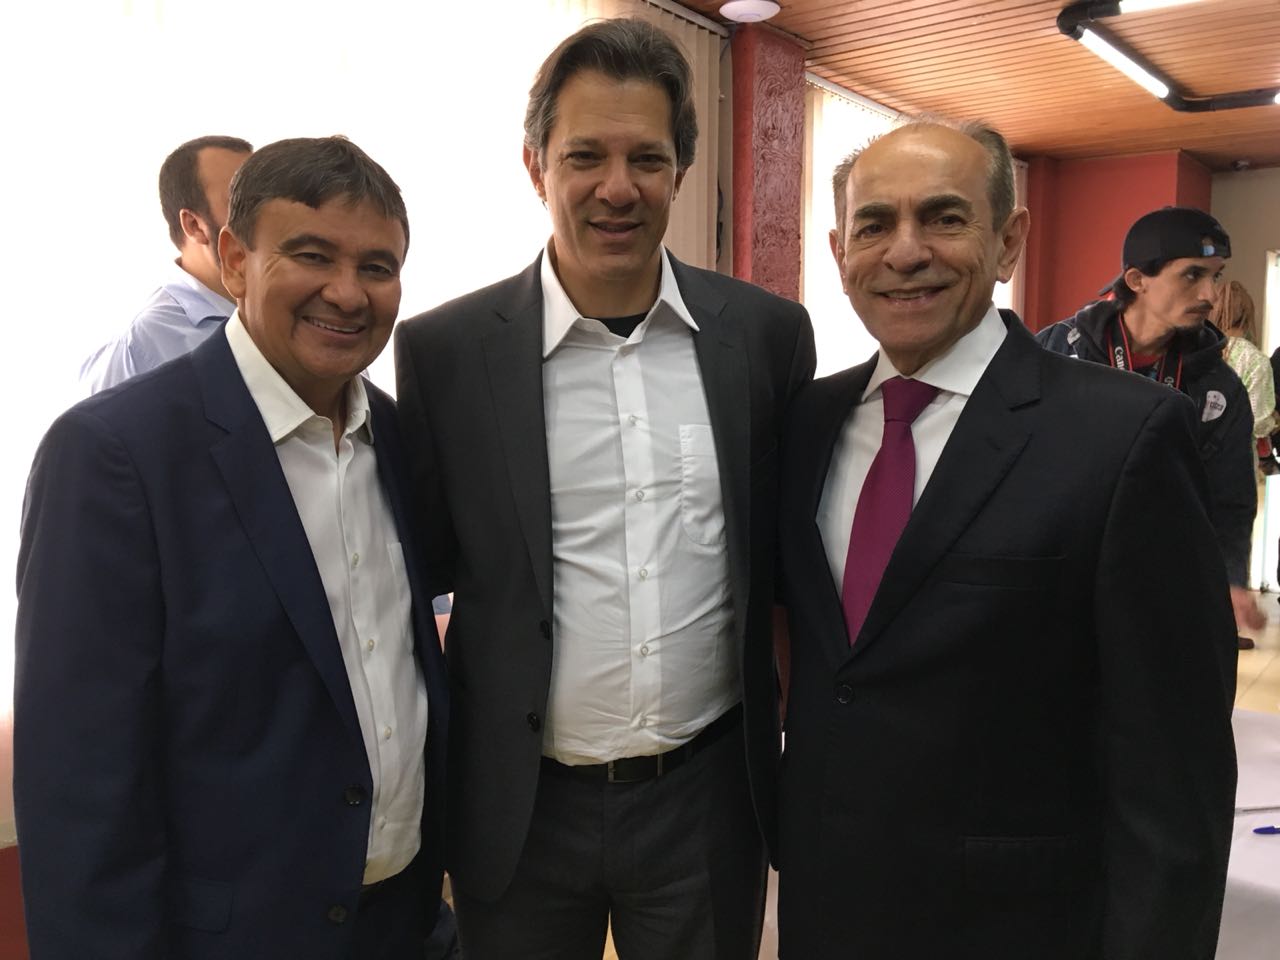 Wellington Dias, Haddad e Marcelo Castro.